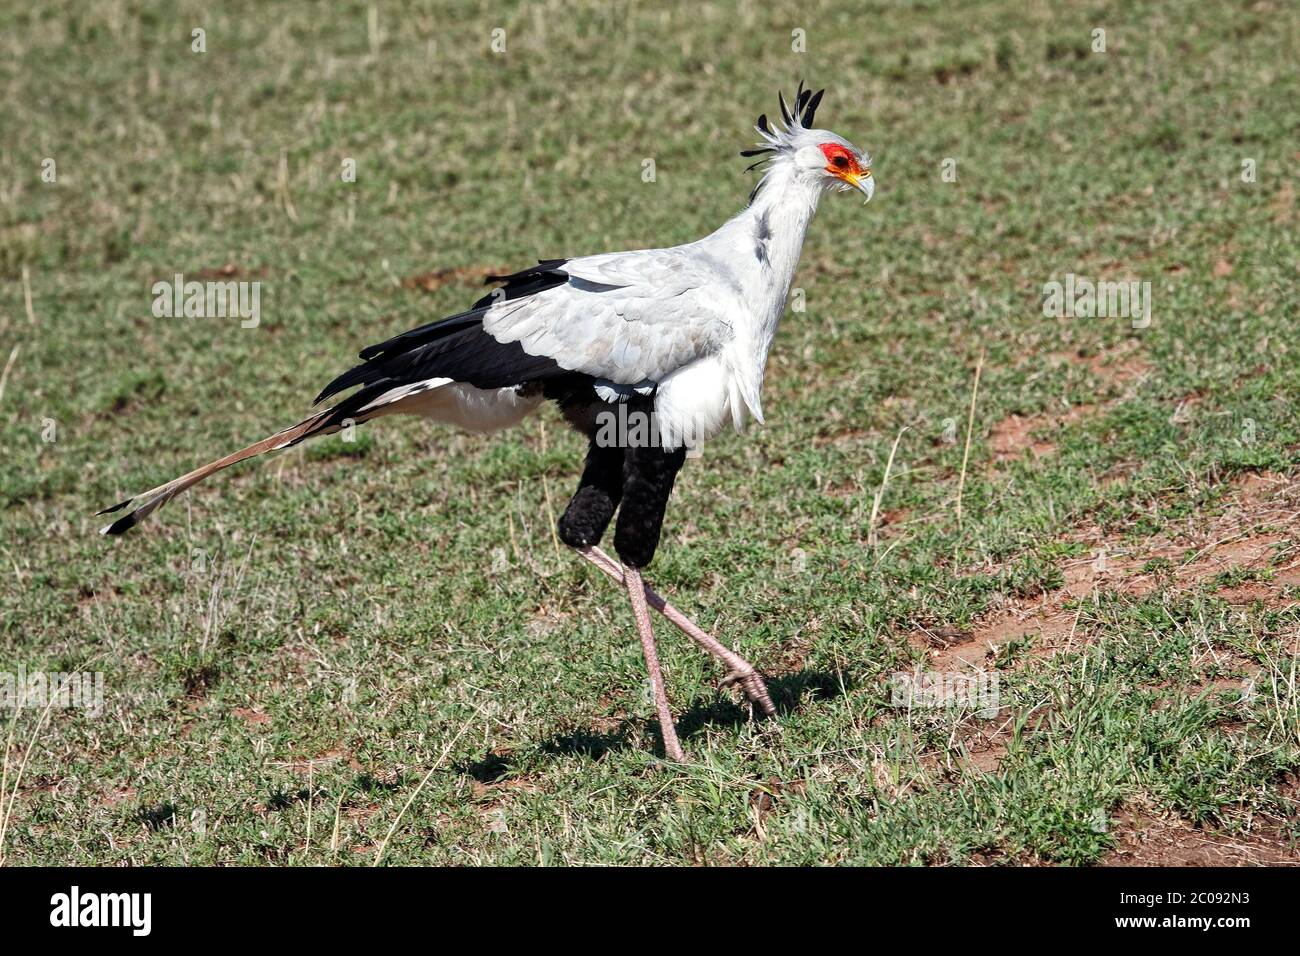 Secretary bird walking, large bird of prey, Sagittarius serpentarius, long legs, 4 feet tall, moving, black, white, grey, small plume, hooked bill, lo Stock Photo